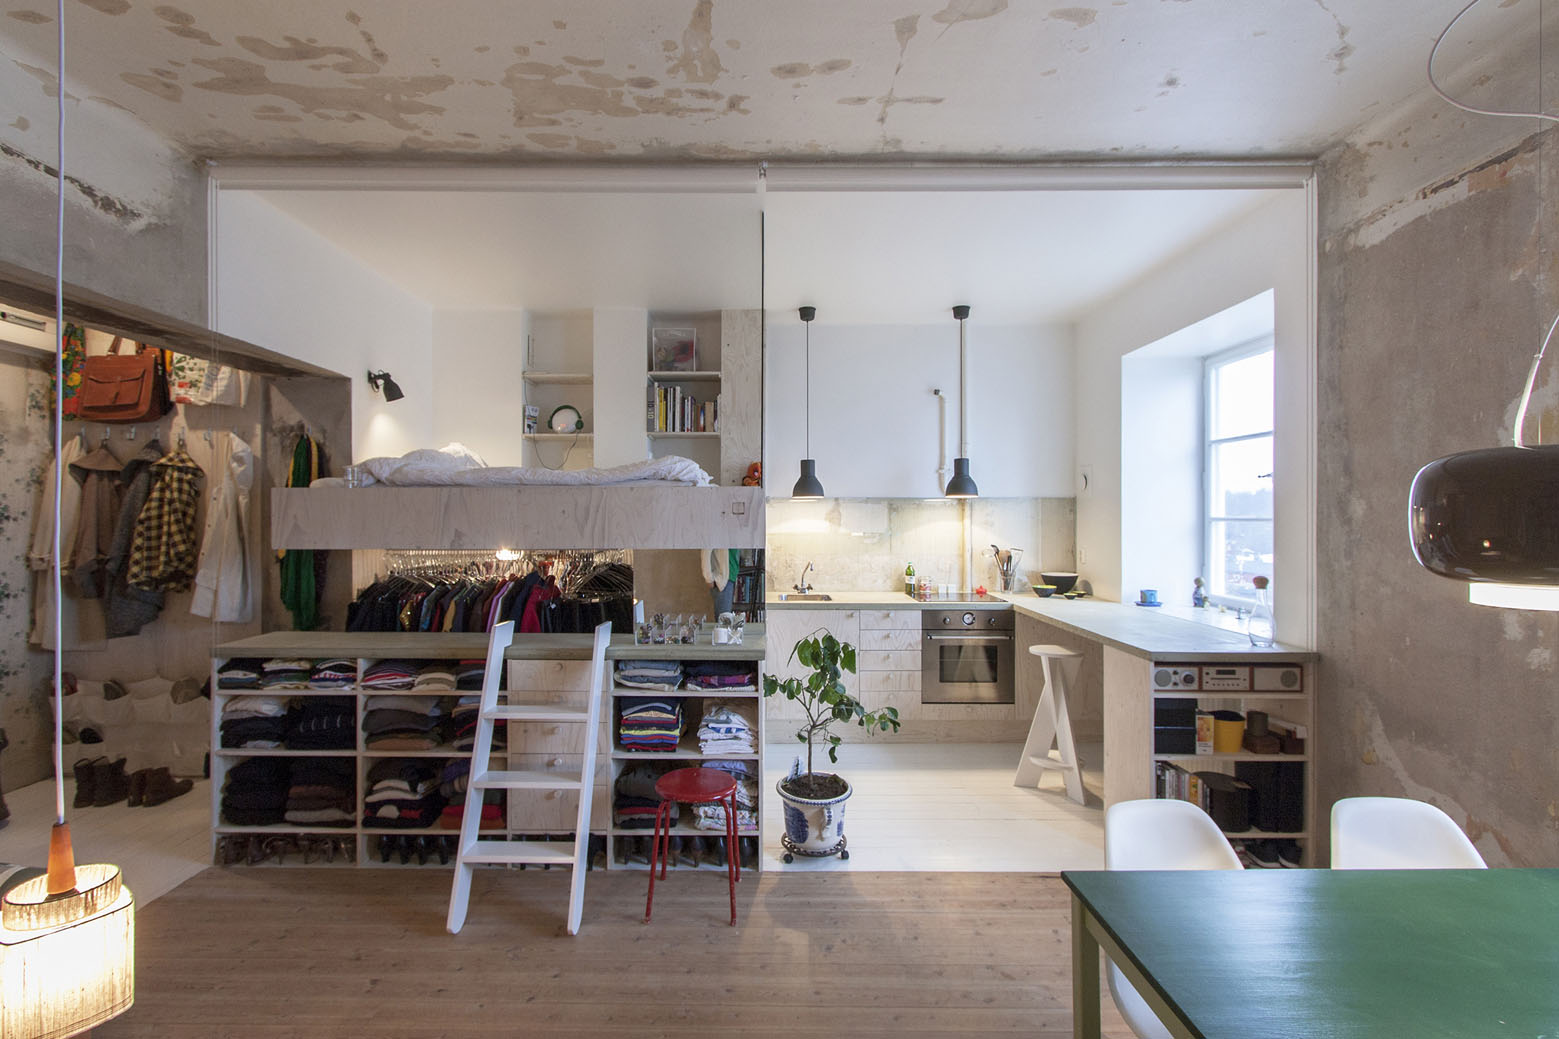 Inexpensive Studio Apartment Renovation With AllInOne Kitchen And